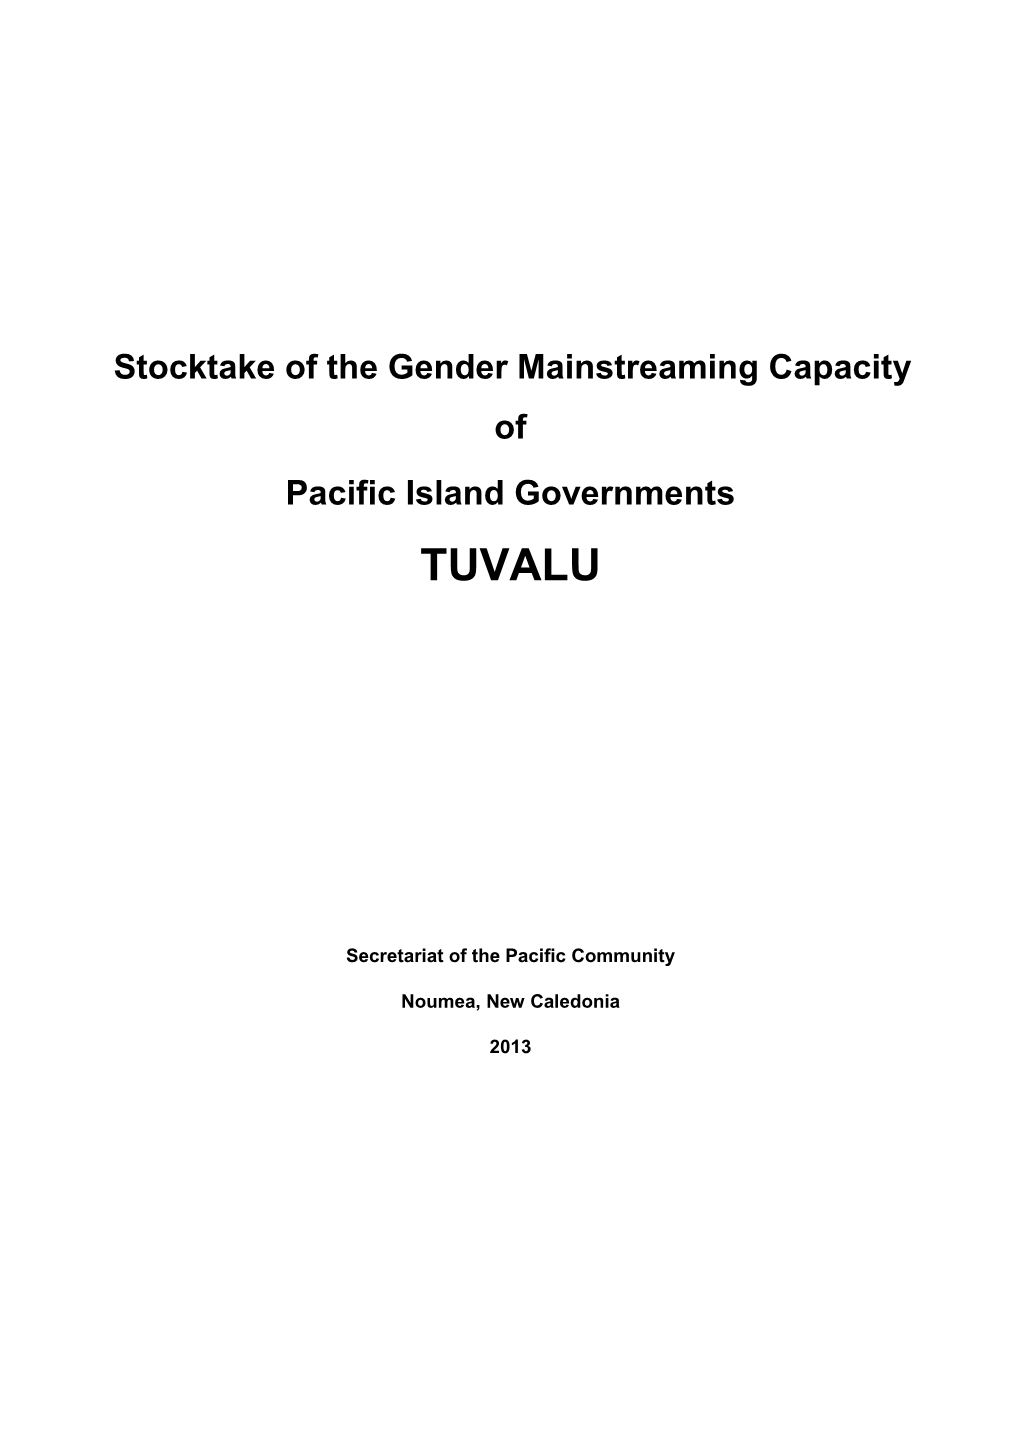 Tuvalu-Gender-Stocktake